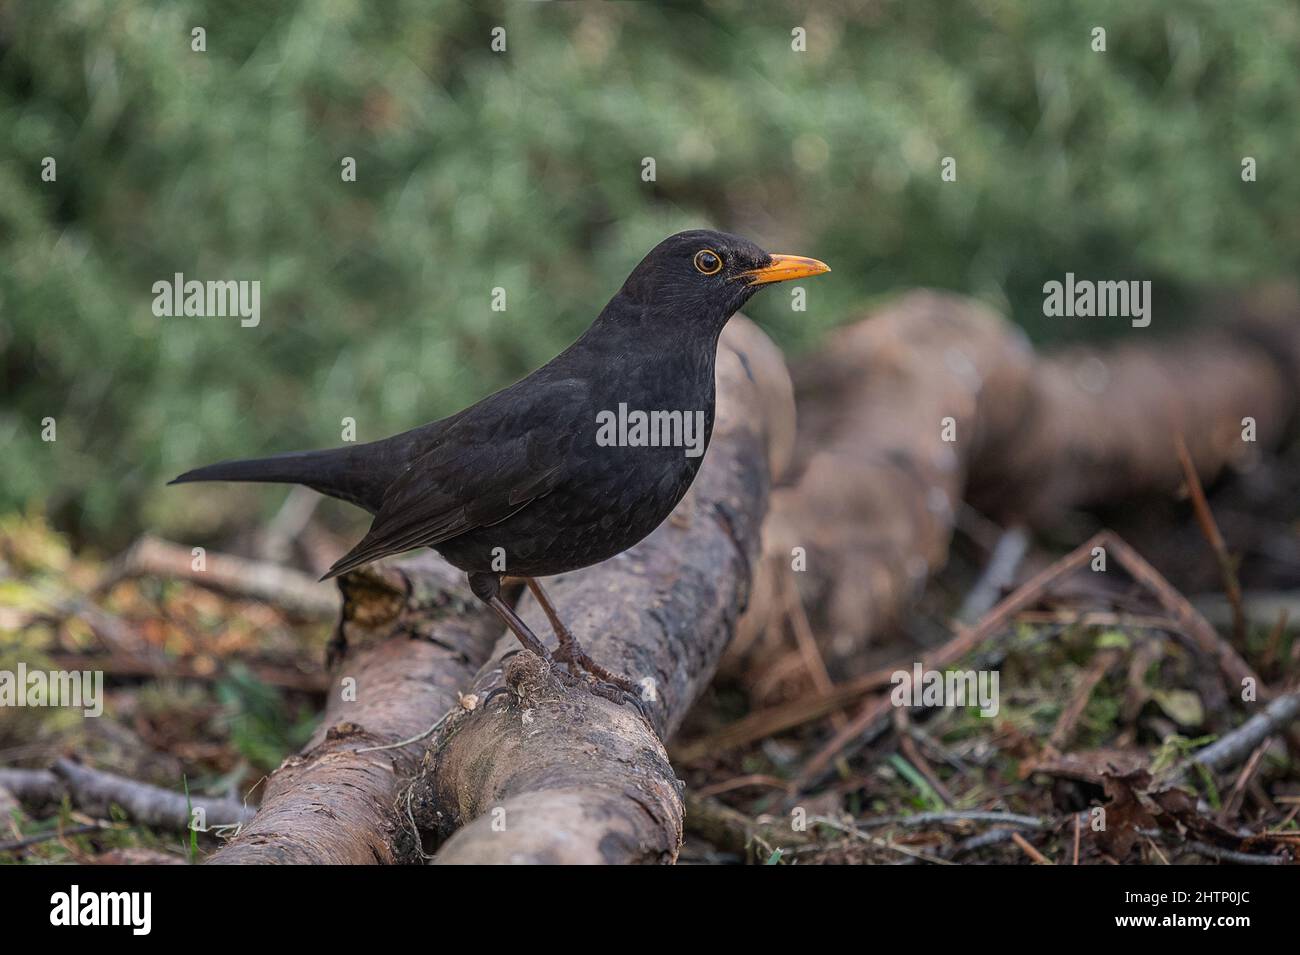 A close up of a male blackbird, Turdus merula, as a profile portrait Stock Photo